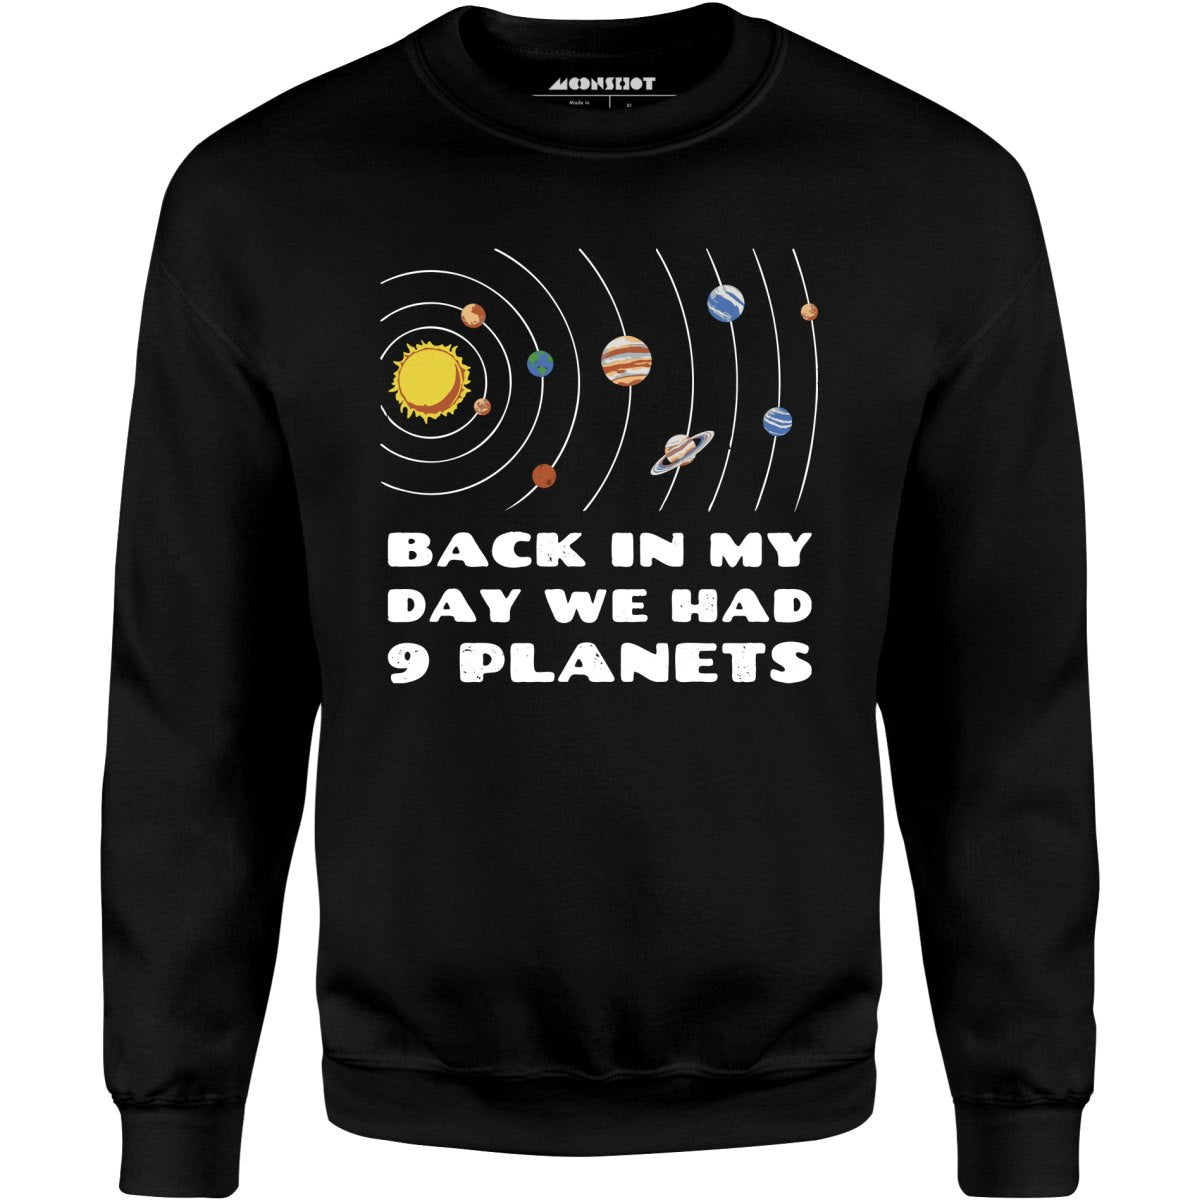 Back in My Day We Had 9 Planets - Unisex Sweatshirt